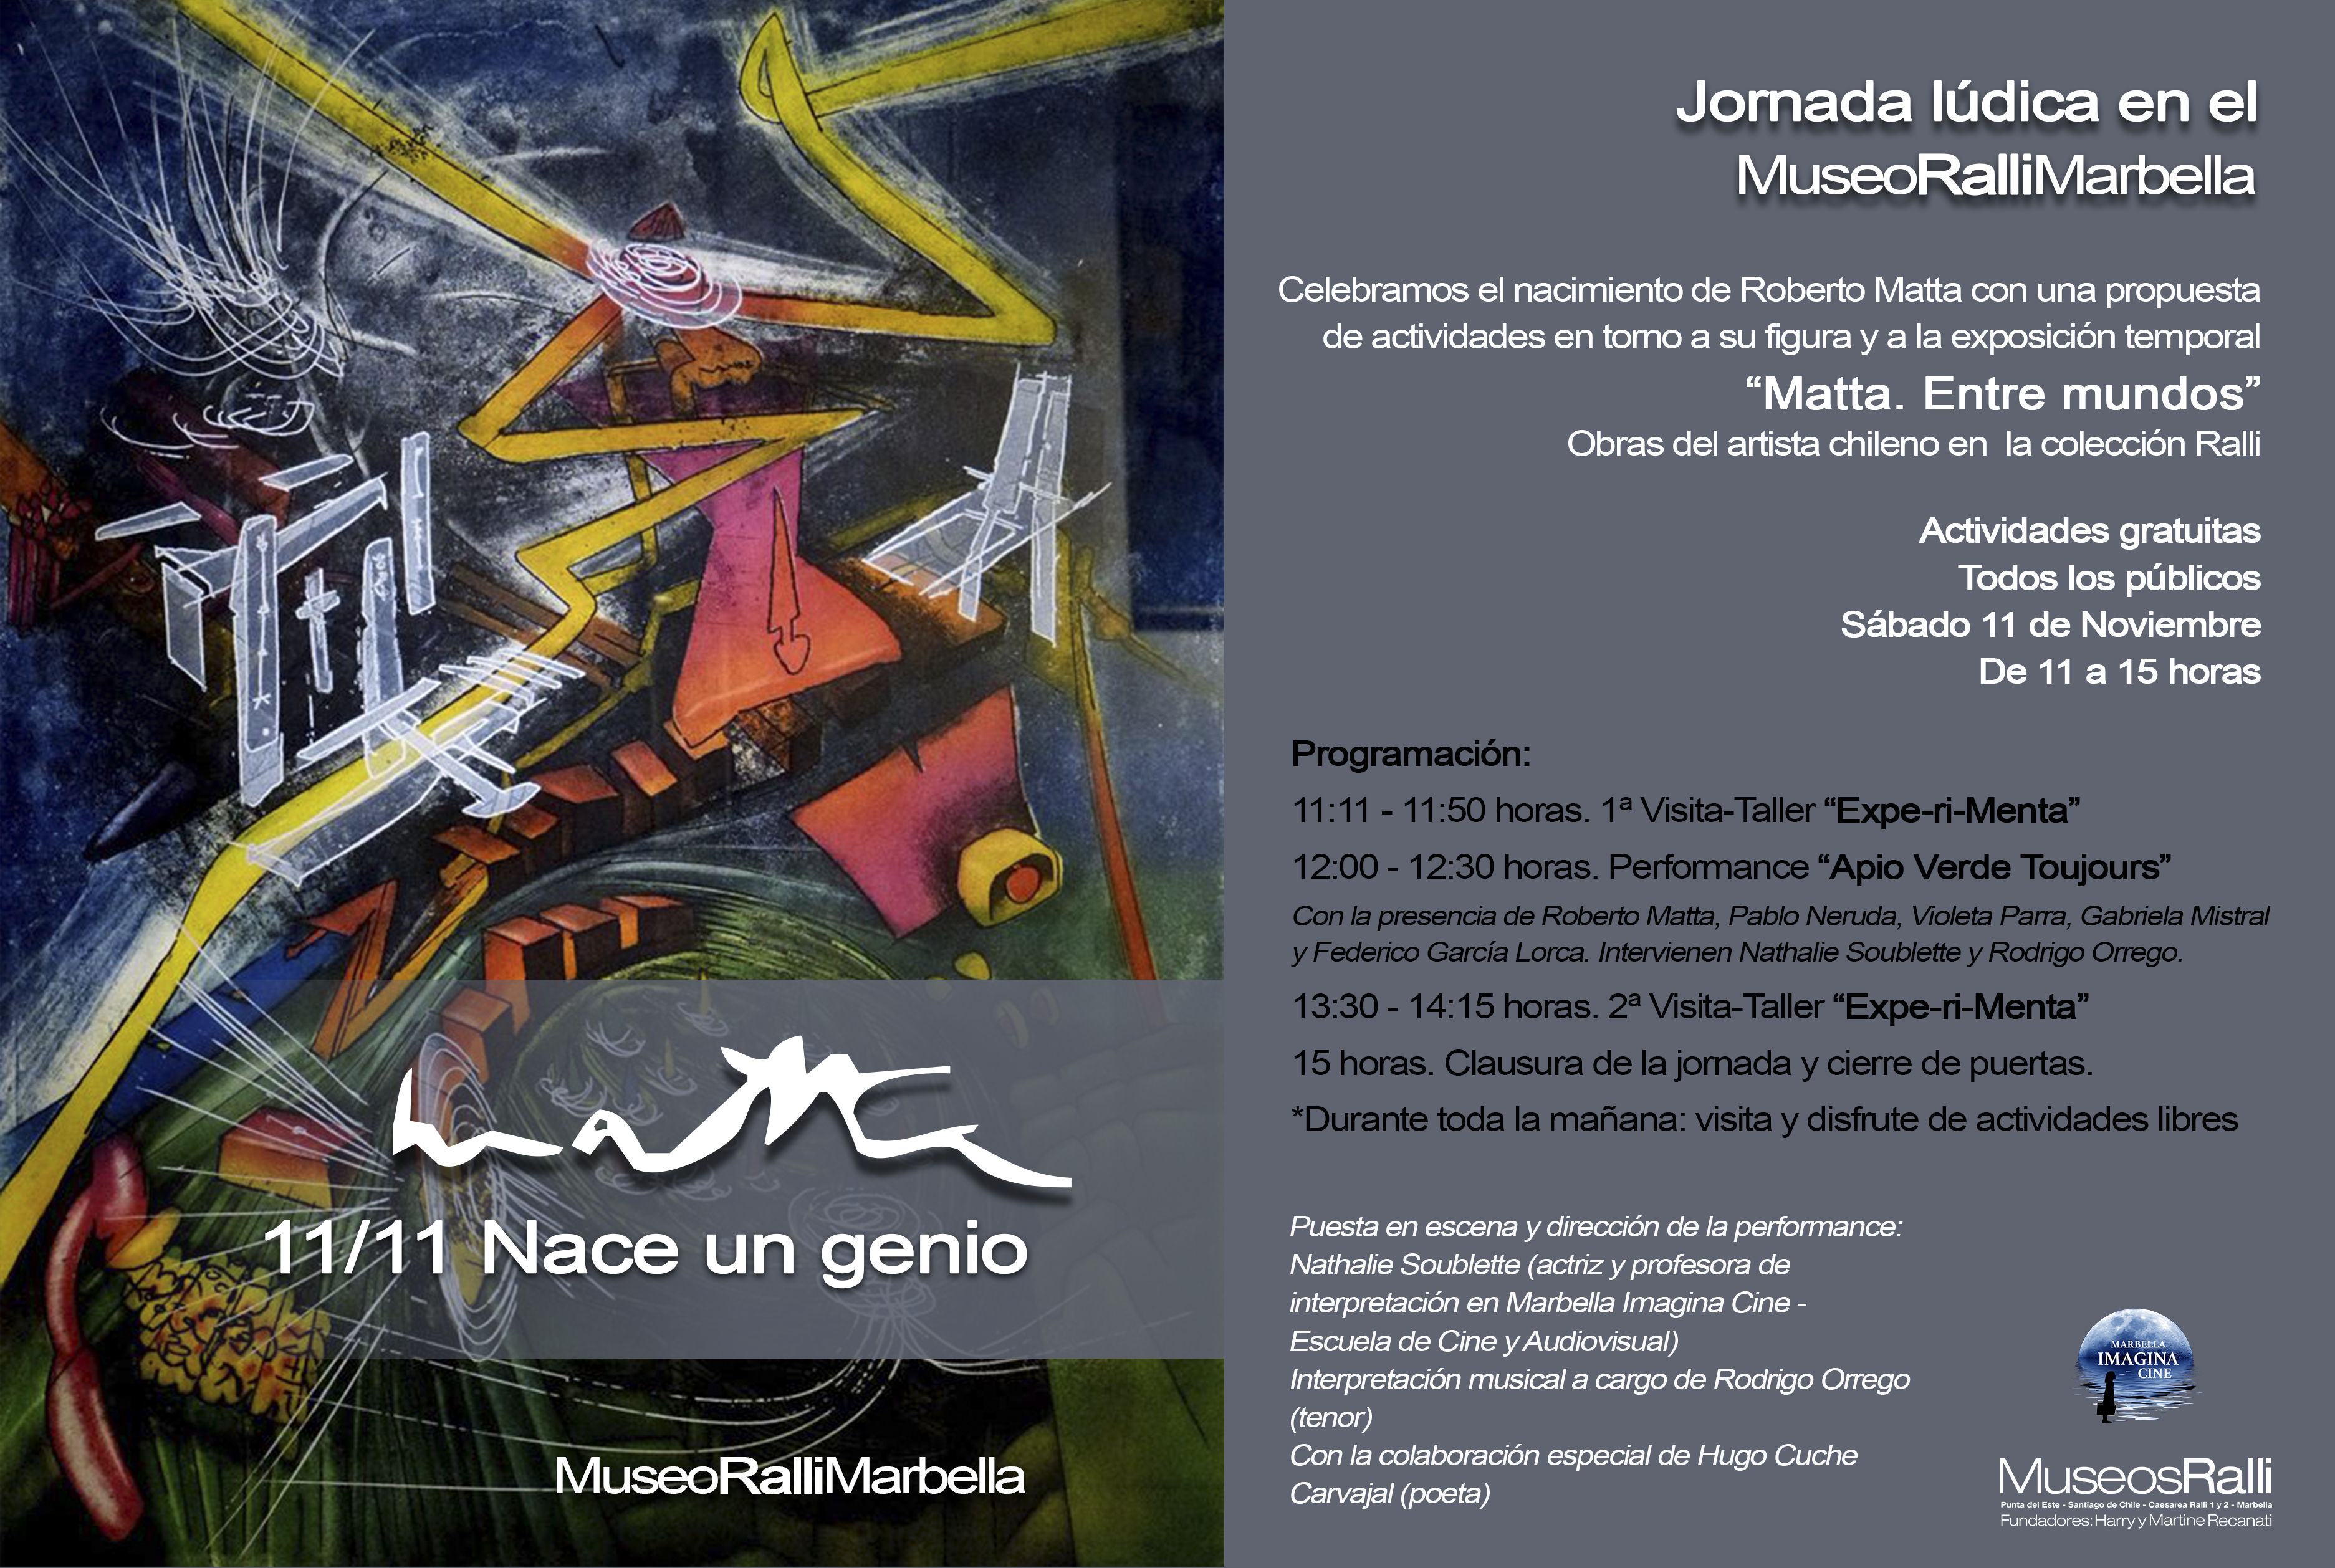 Invitation to an exhibition at the Marbella Museum on the anniversary of Roberto Matta's birth